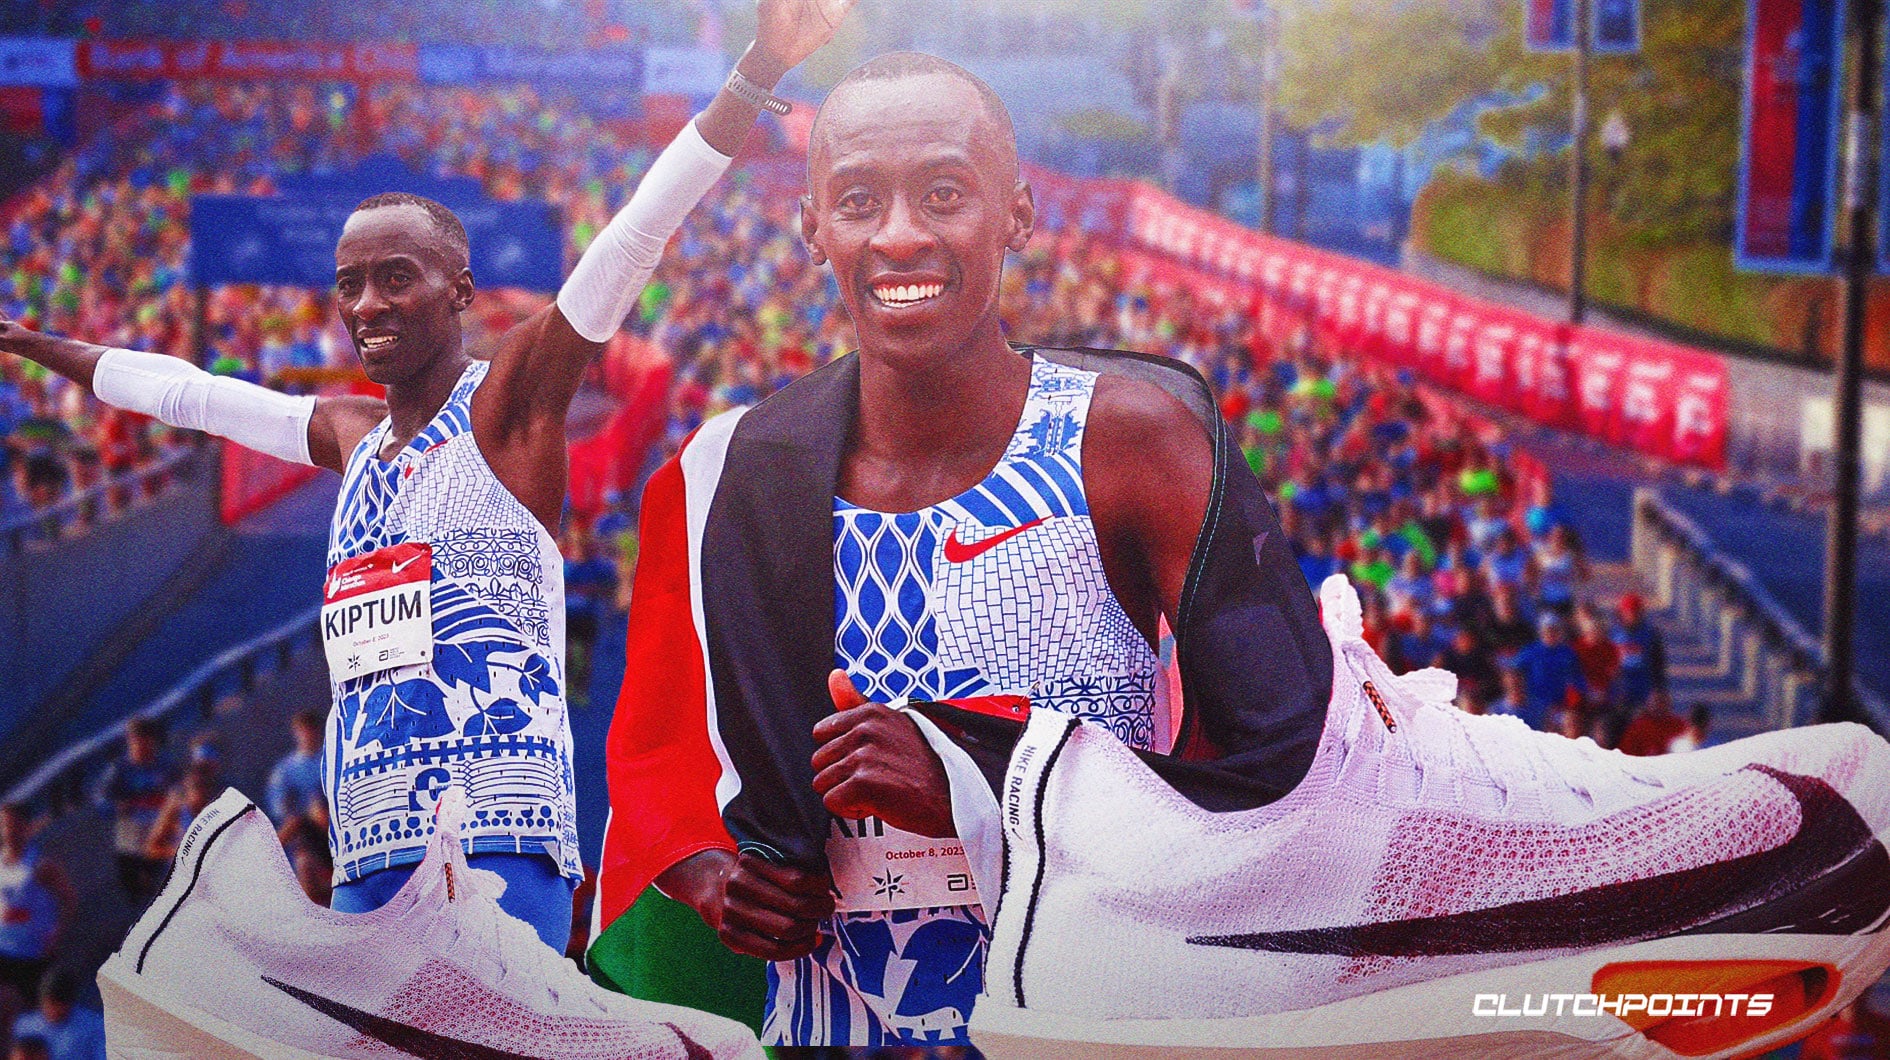 Chicago Marathon Kelvin Kiptum shatters world record in new Nikes